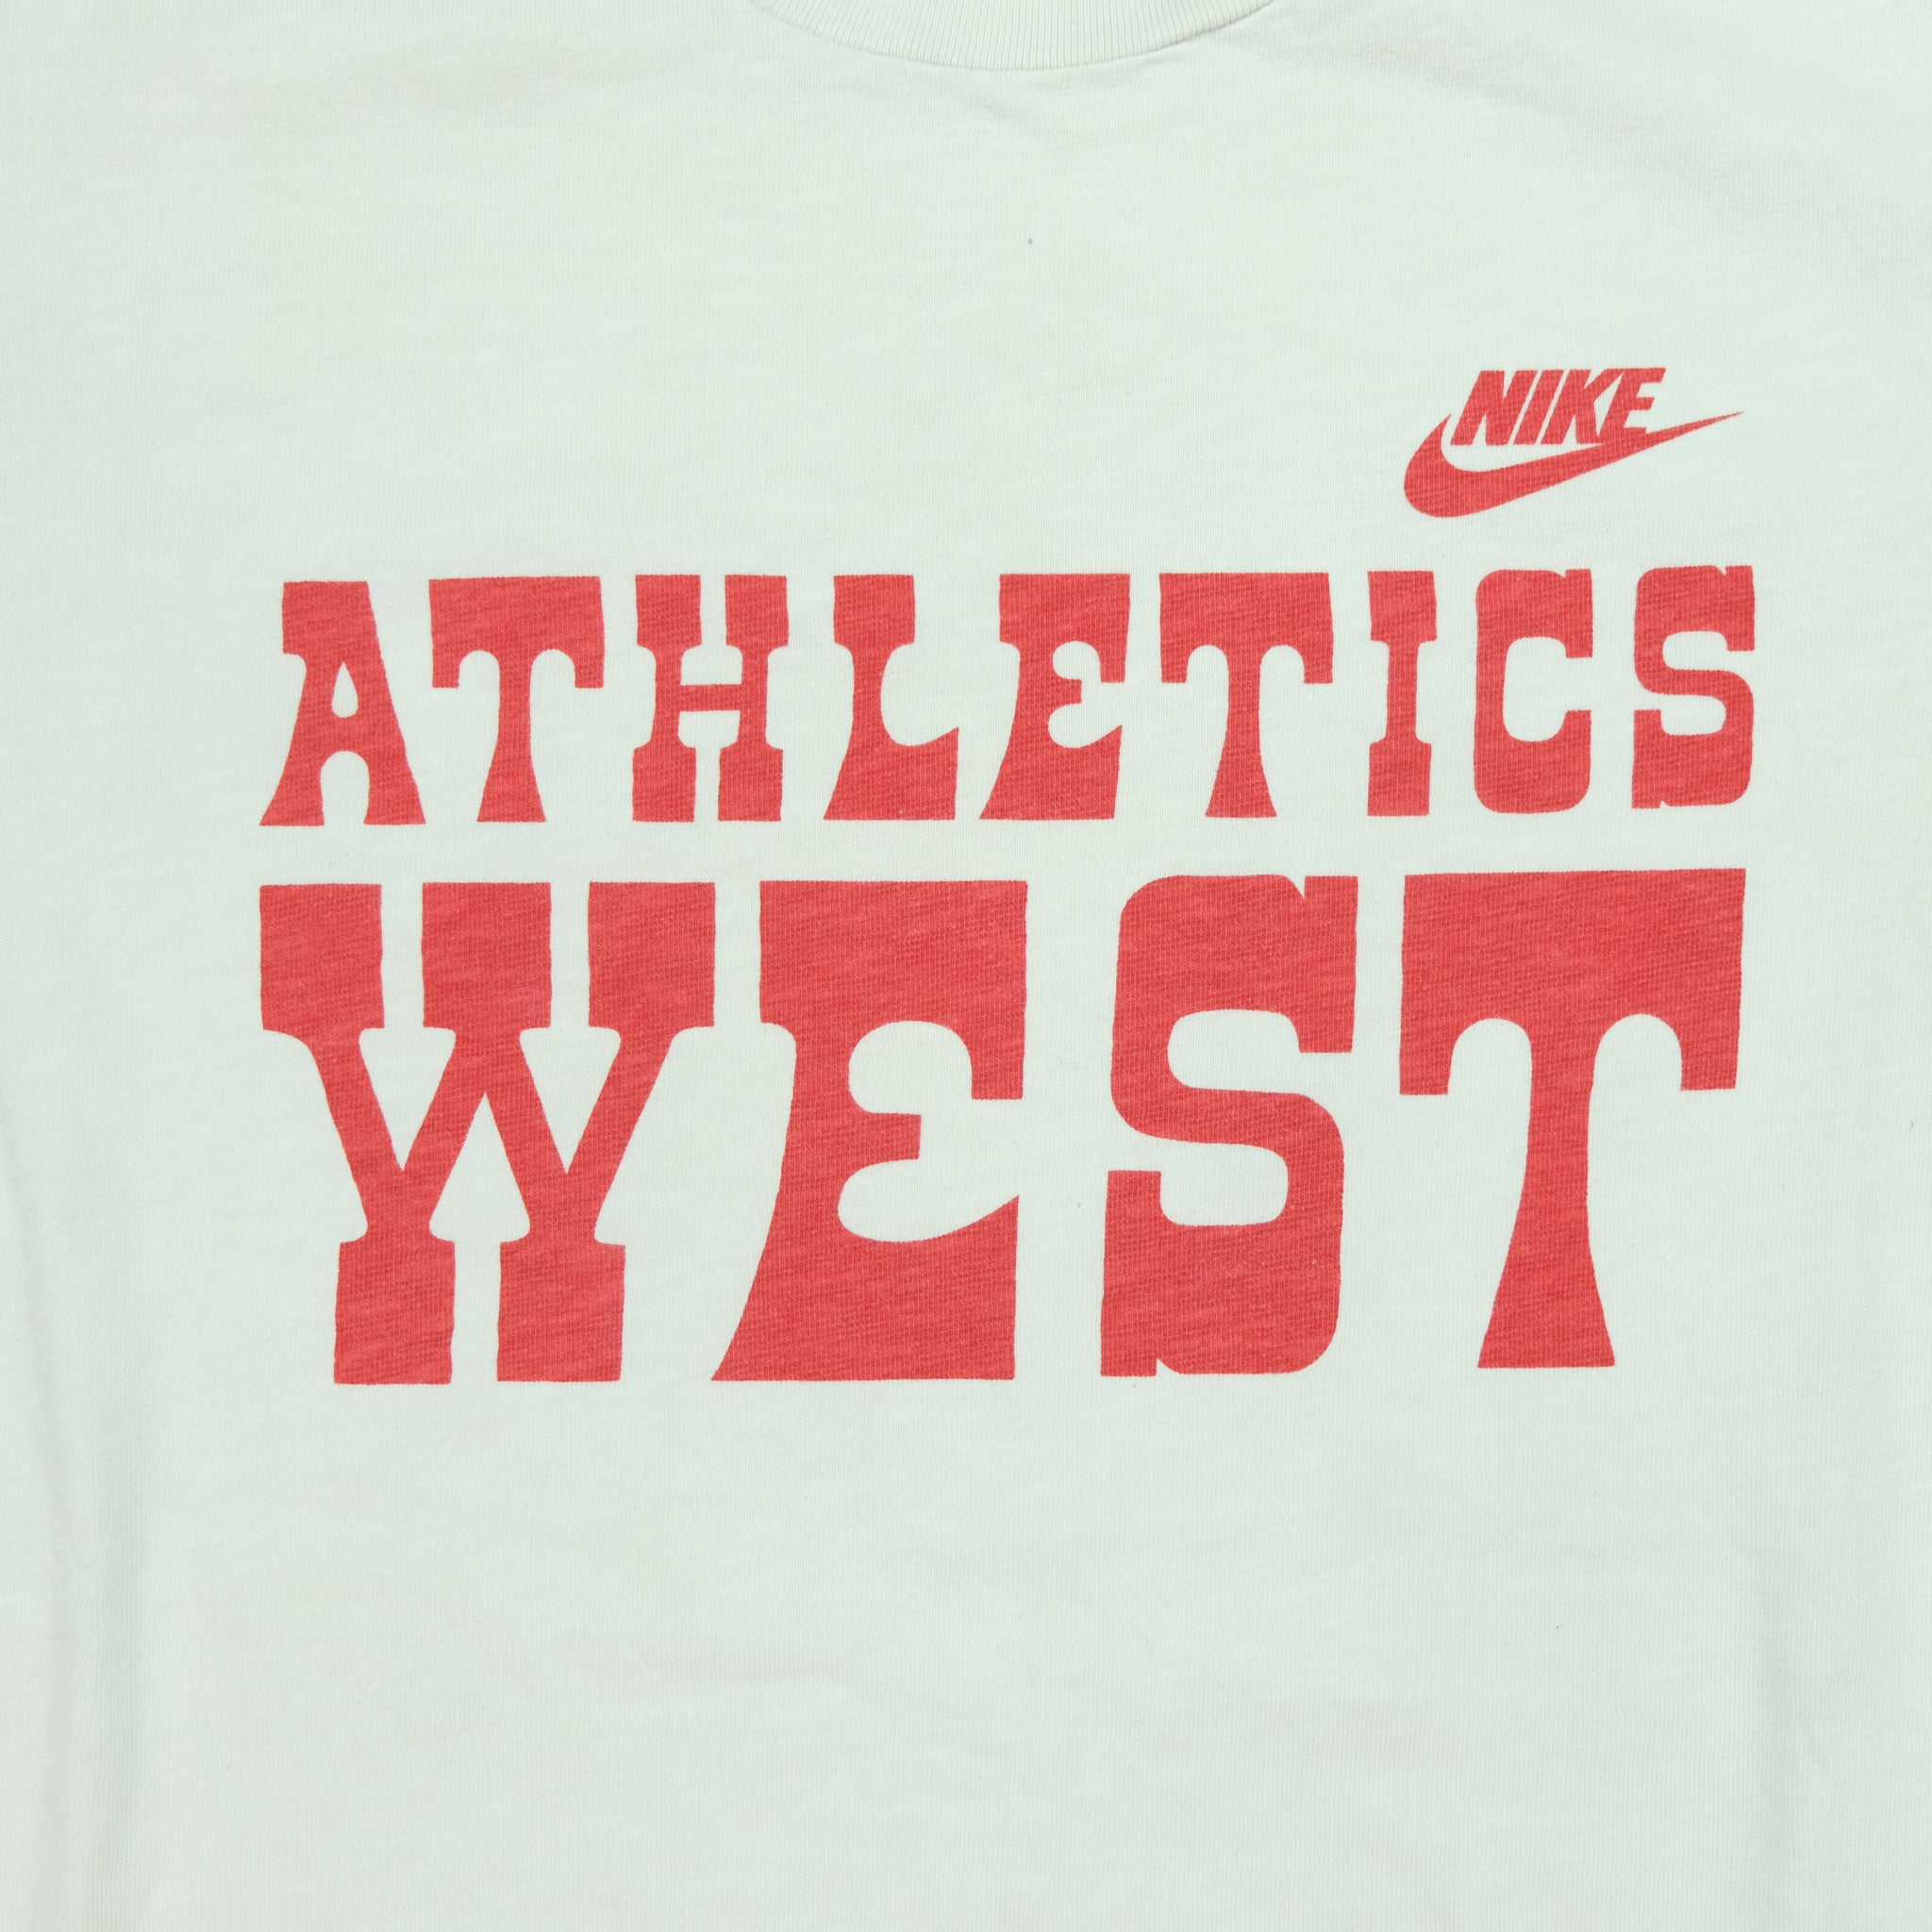 Vaag ramp Hoeveelheid van Vintage Nike Athletics West Tee | Reset Vintage Shirts | BUY • SELL • TRADE  | St. Louis & Kansas City – Reset Web Store